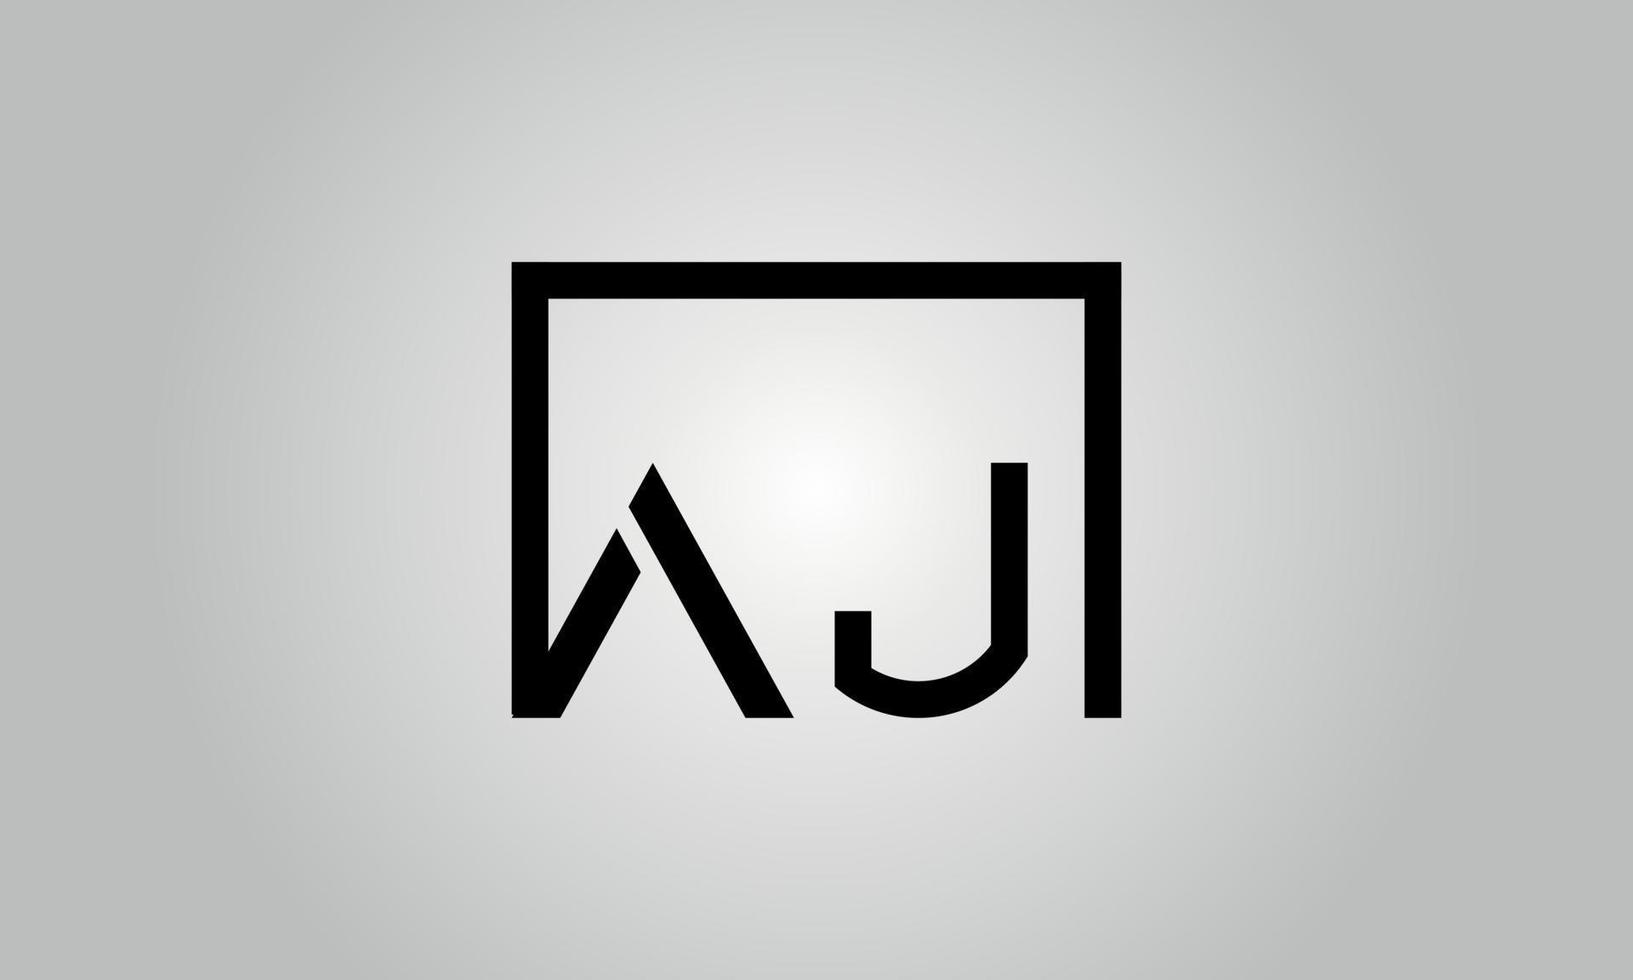 Letter AJ logo design. AJ logo with square shape in black colors vector free vector template.